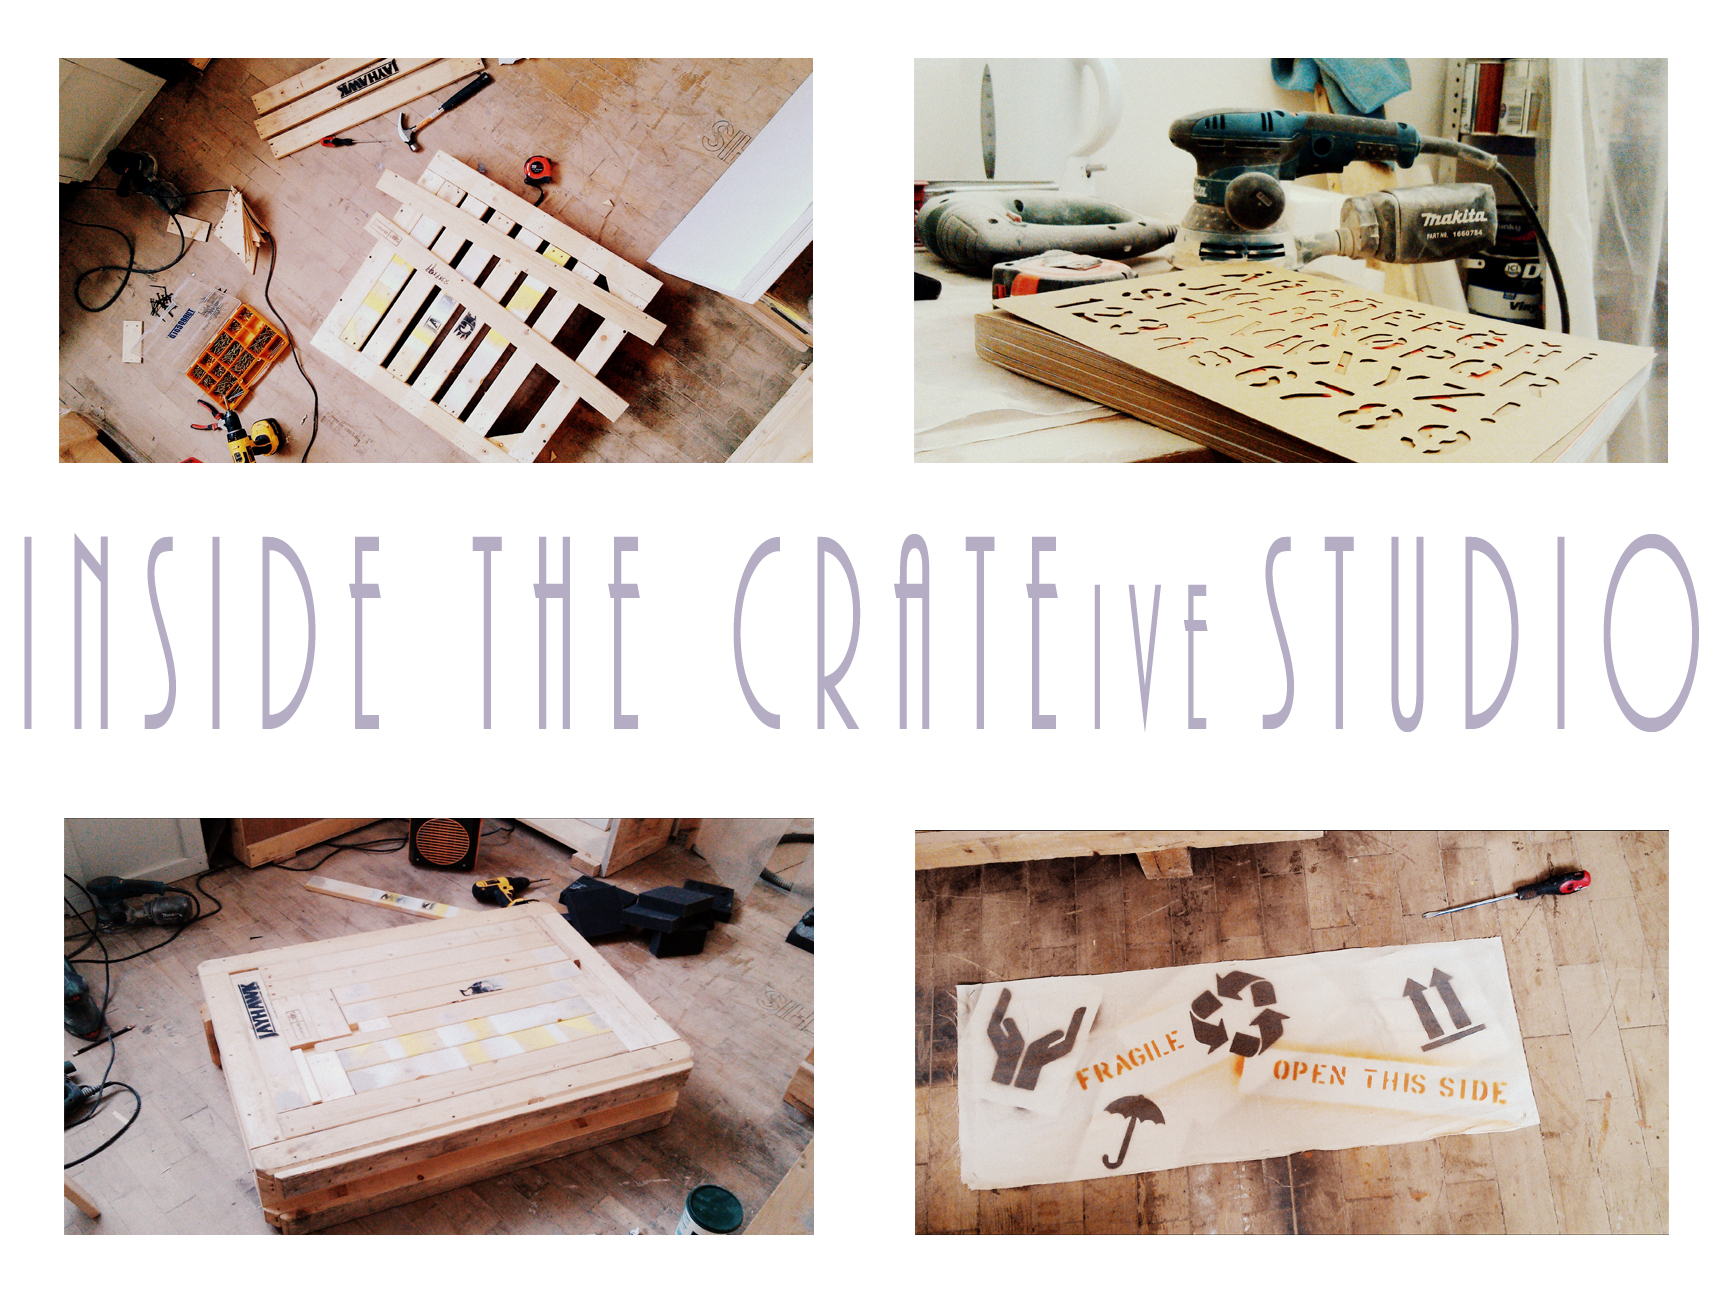 CRATEive - Inside the CRATEive Studio